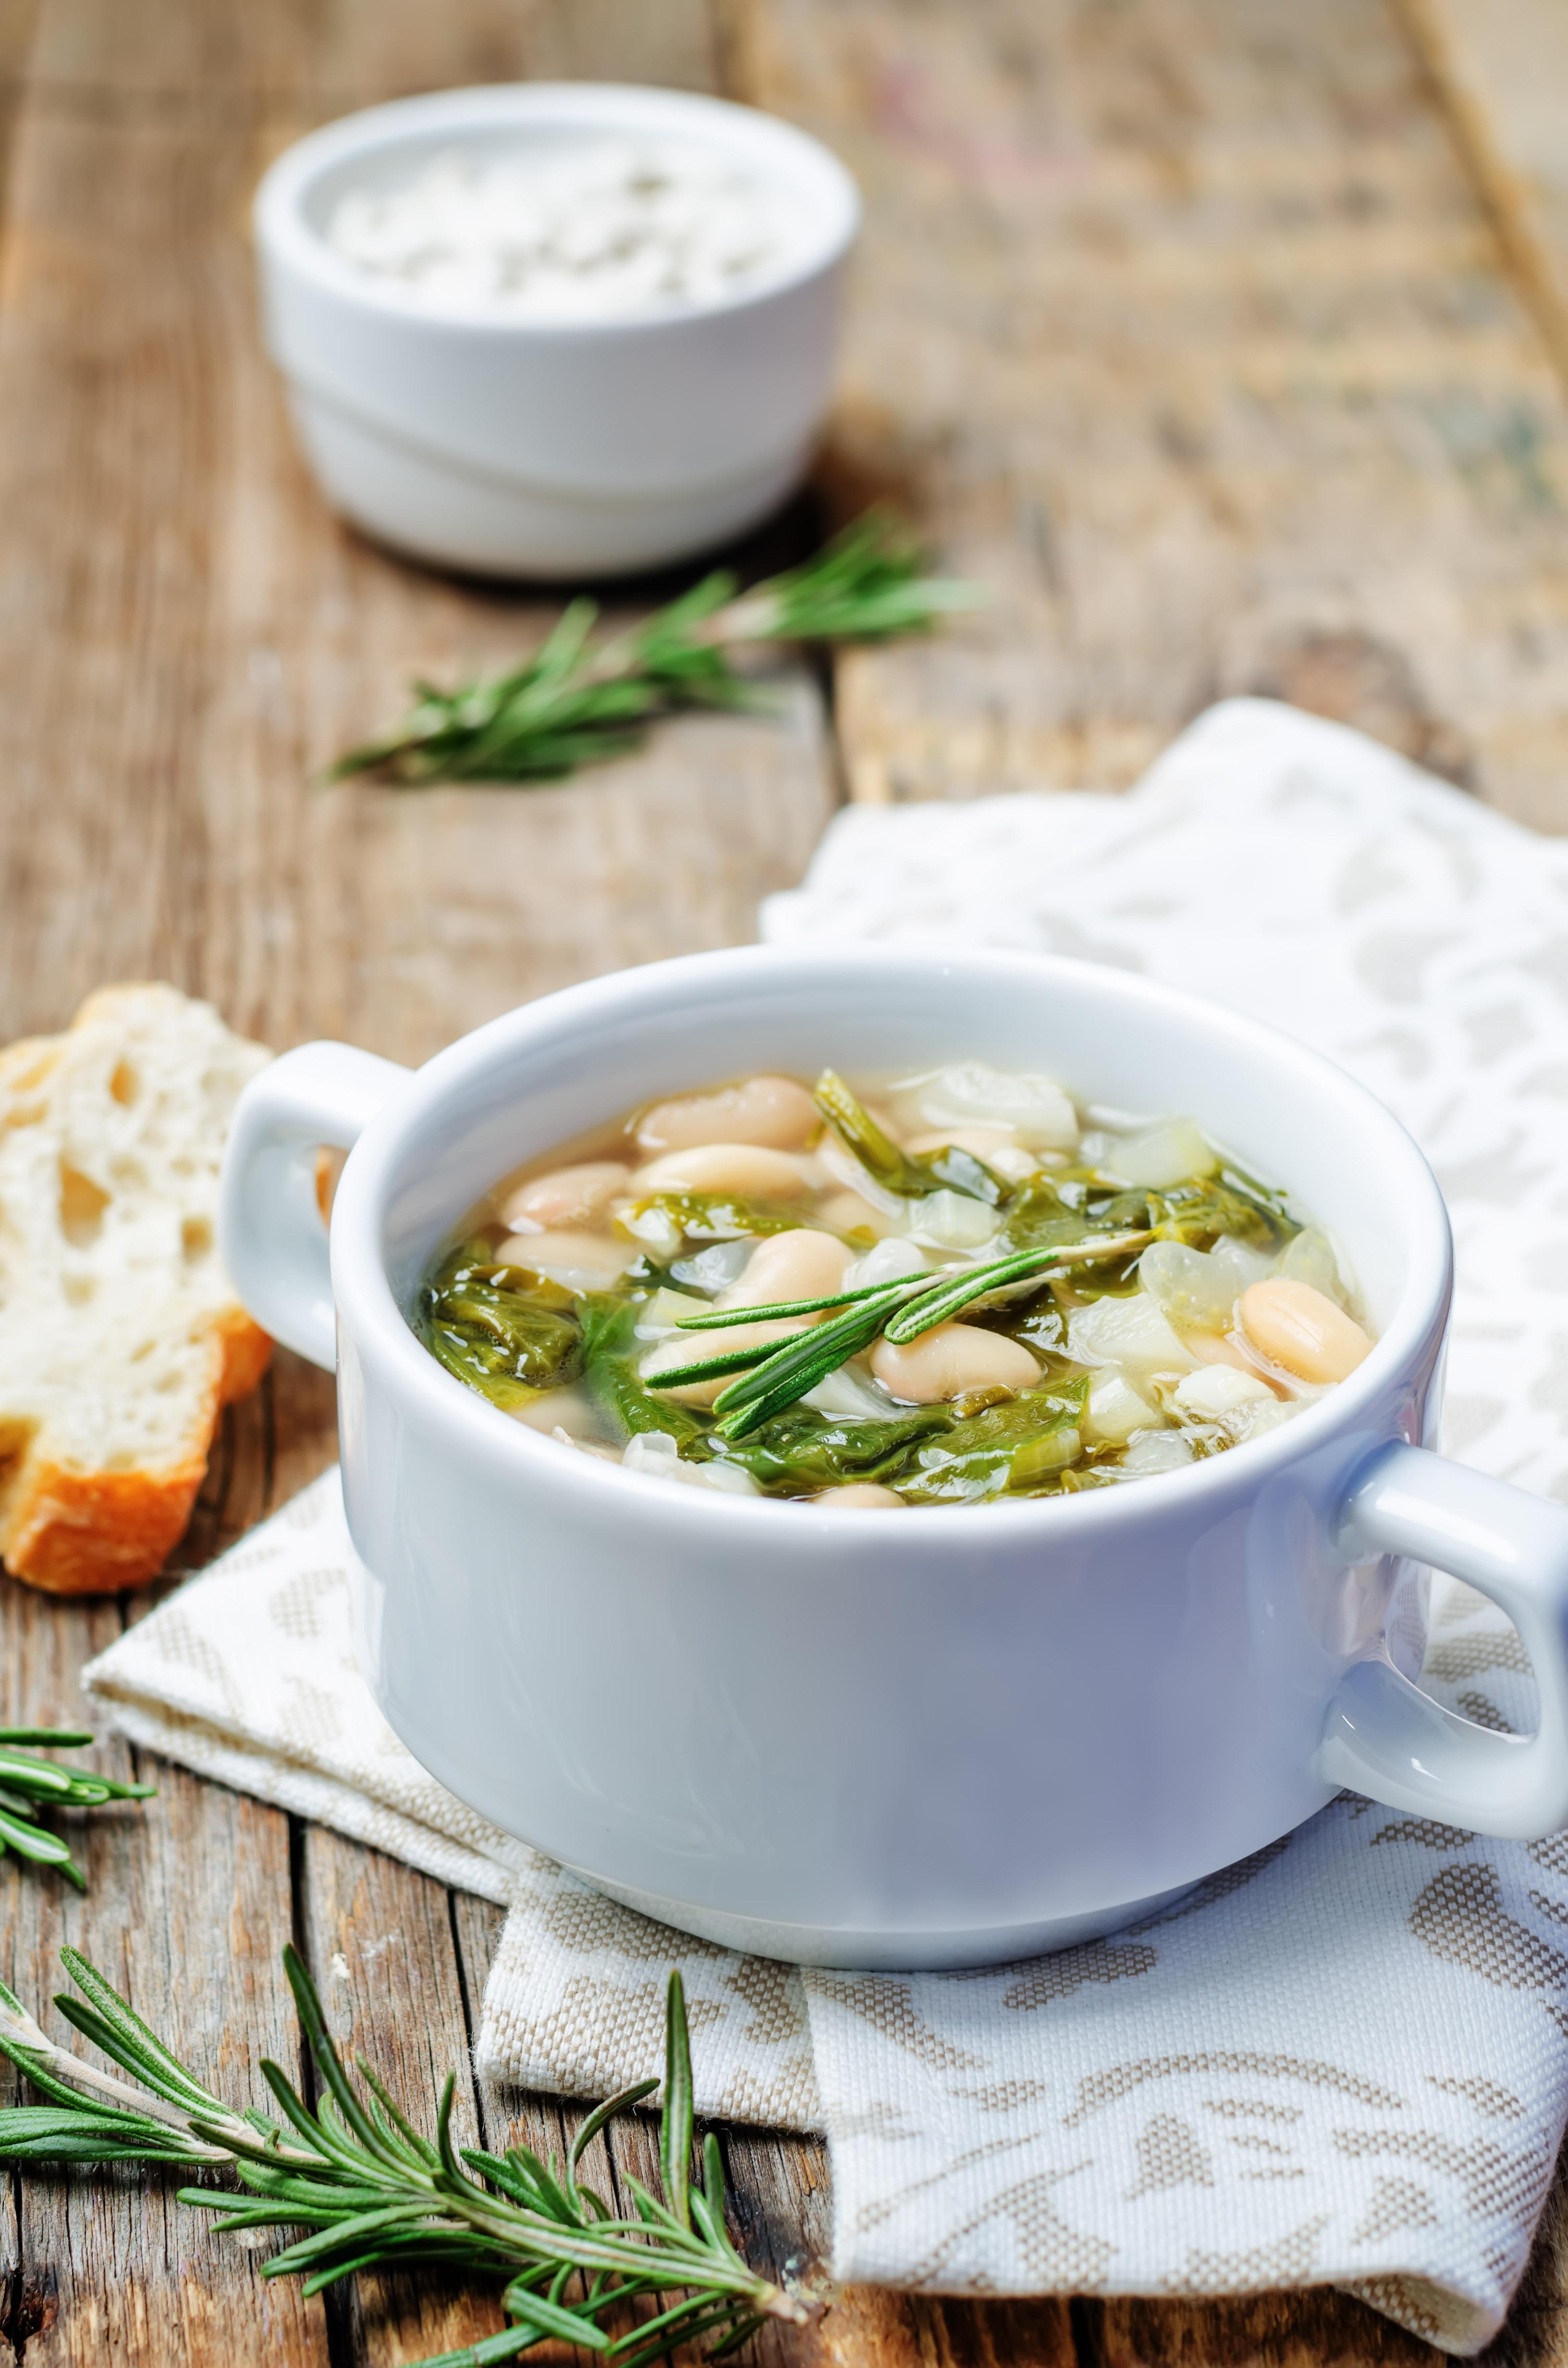 Make & Take: Rosemary, Potato, and White Bean Soup